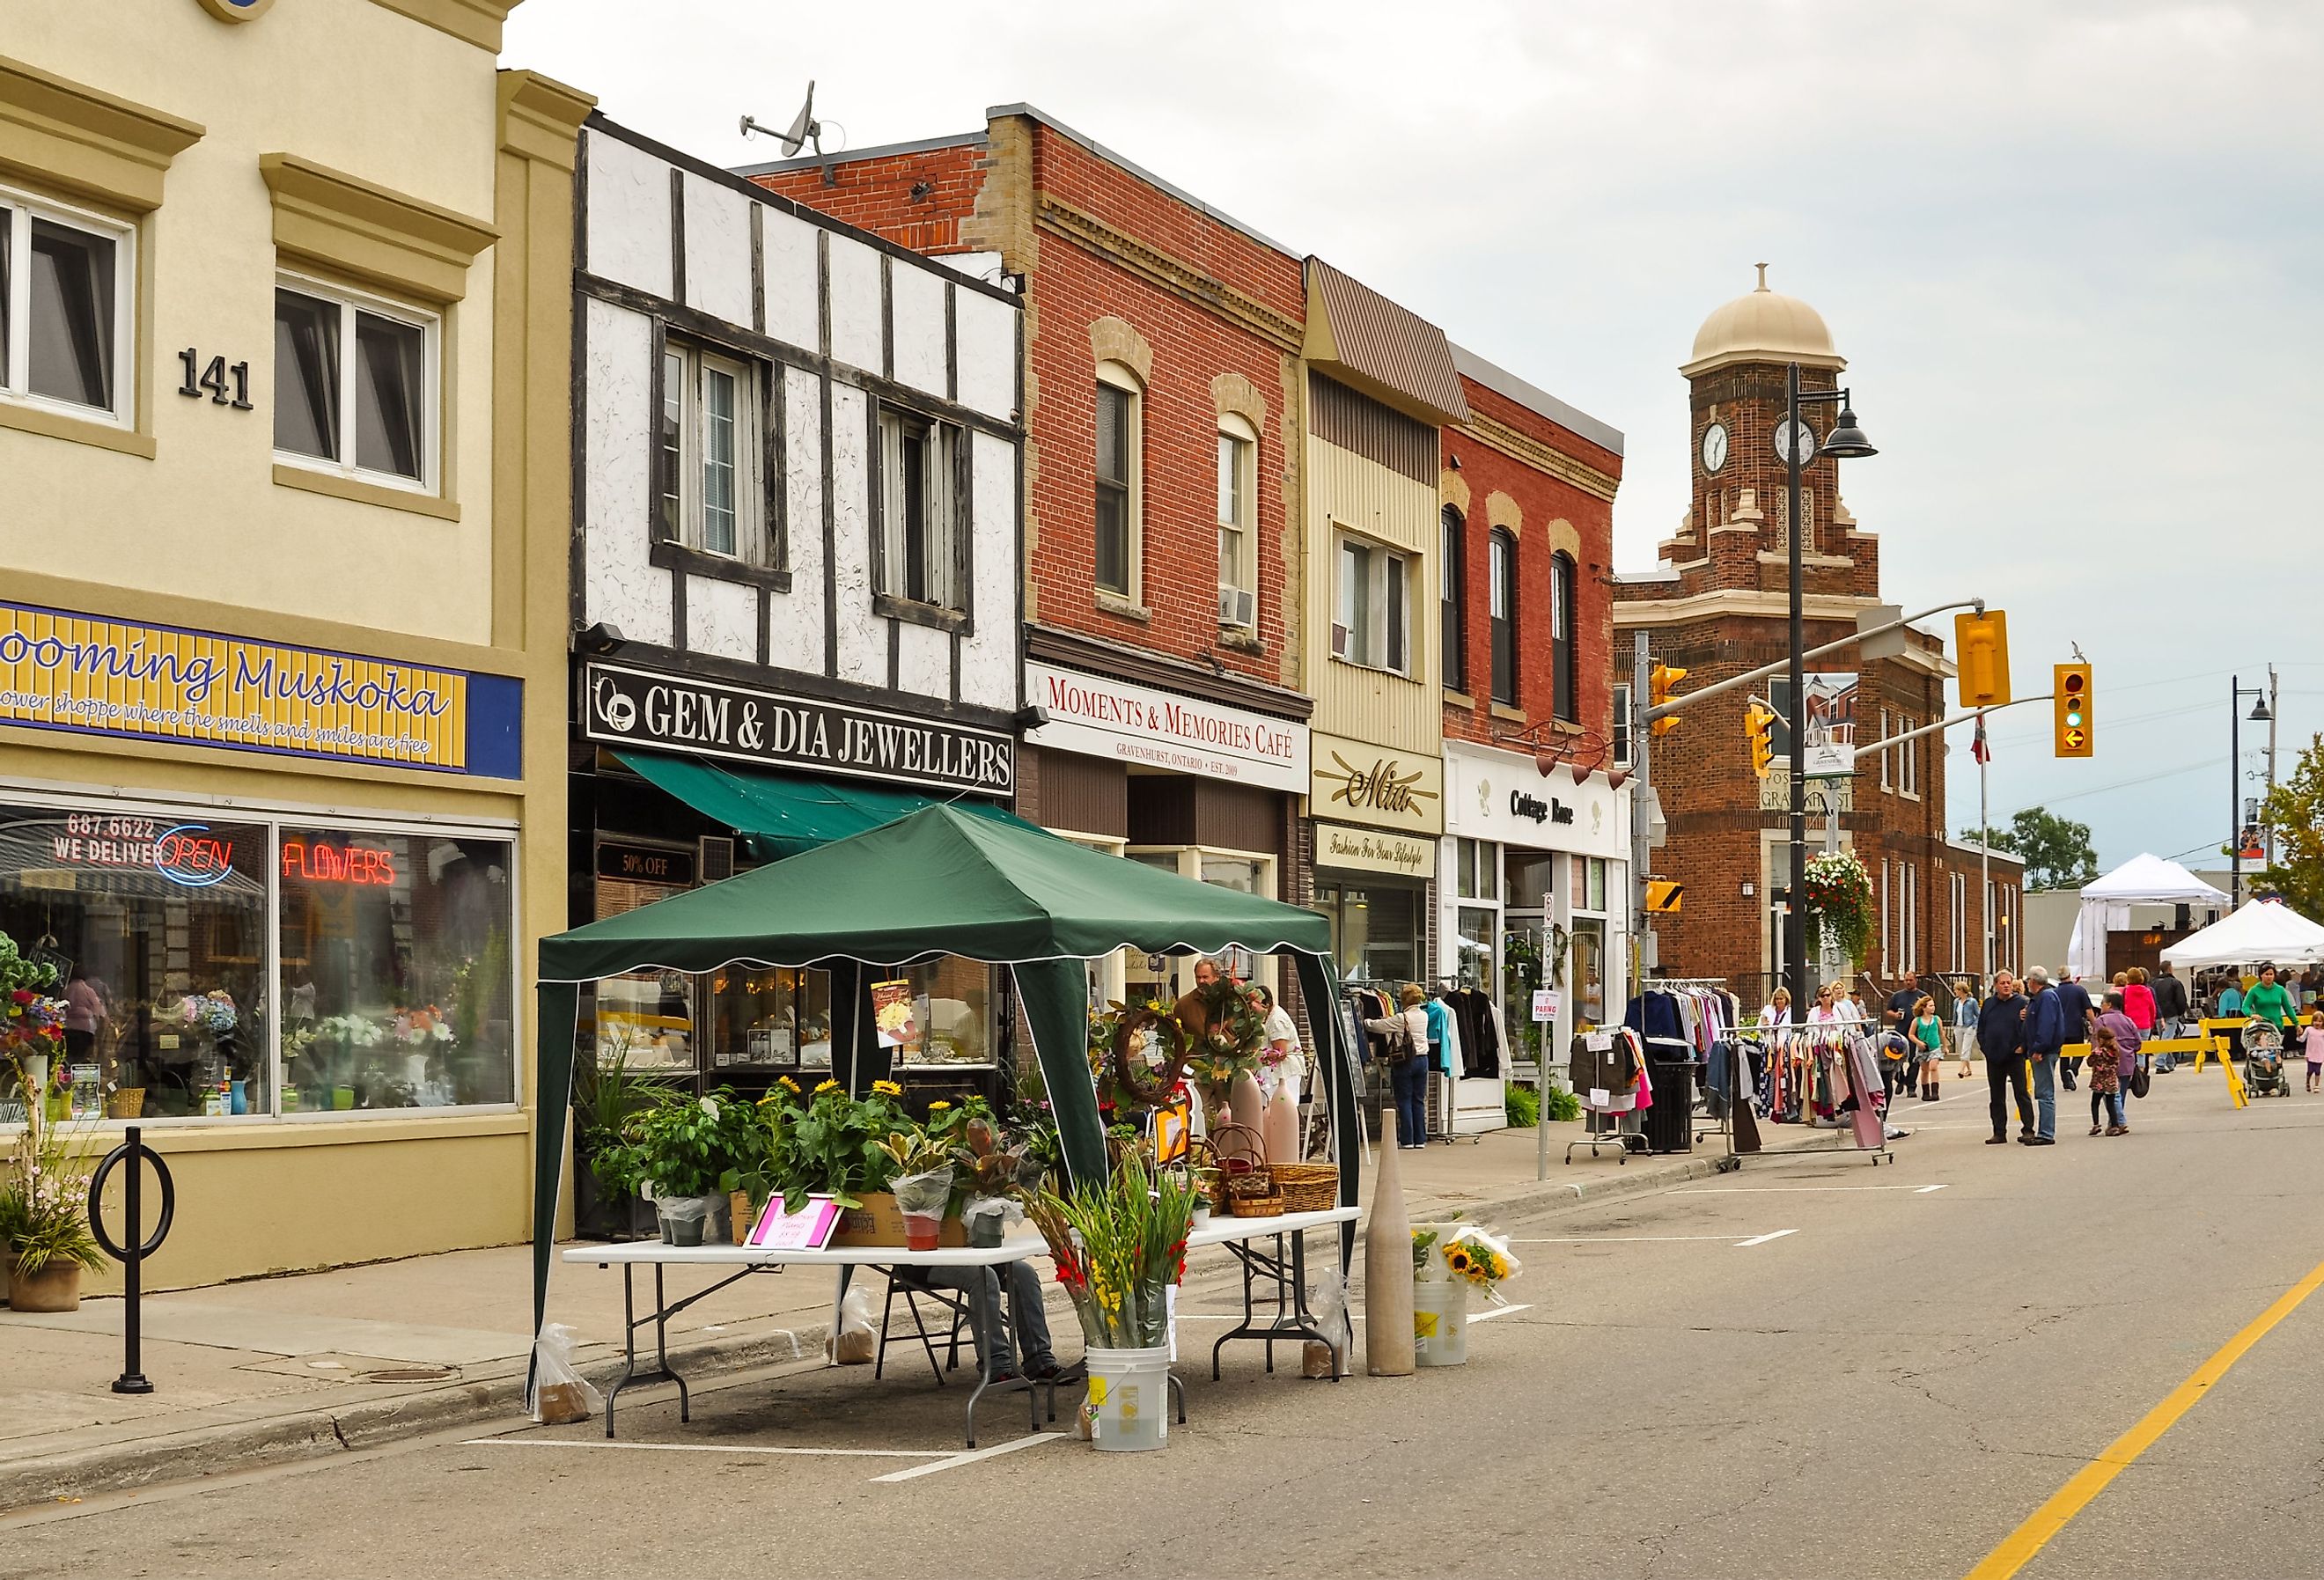 Retail stores on Muskoka Road, the main thoroughfare in Gravenhurst, Ontario. Image credit LesPalenik via Shutterstock